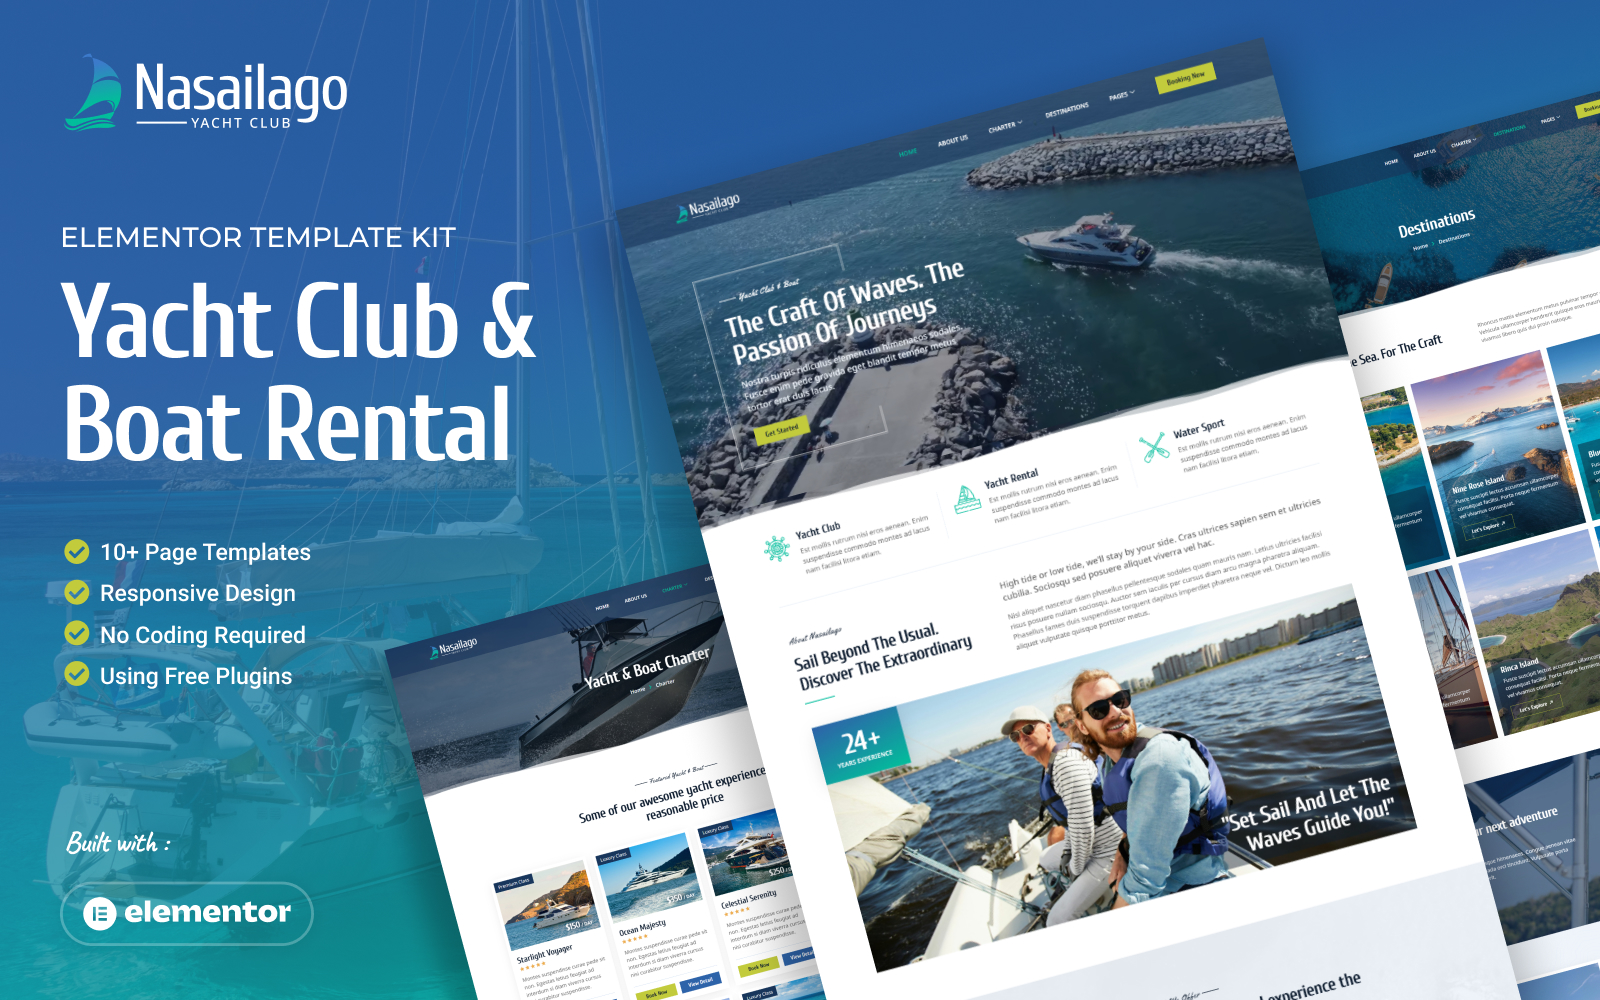 Nasailago - Yacht Club & Boat Rental Elementor Template Kit